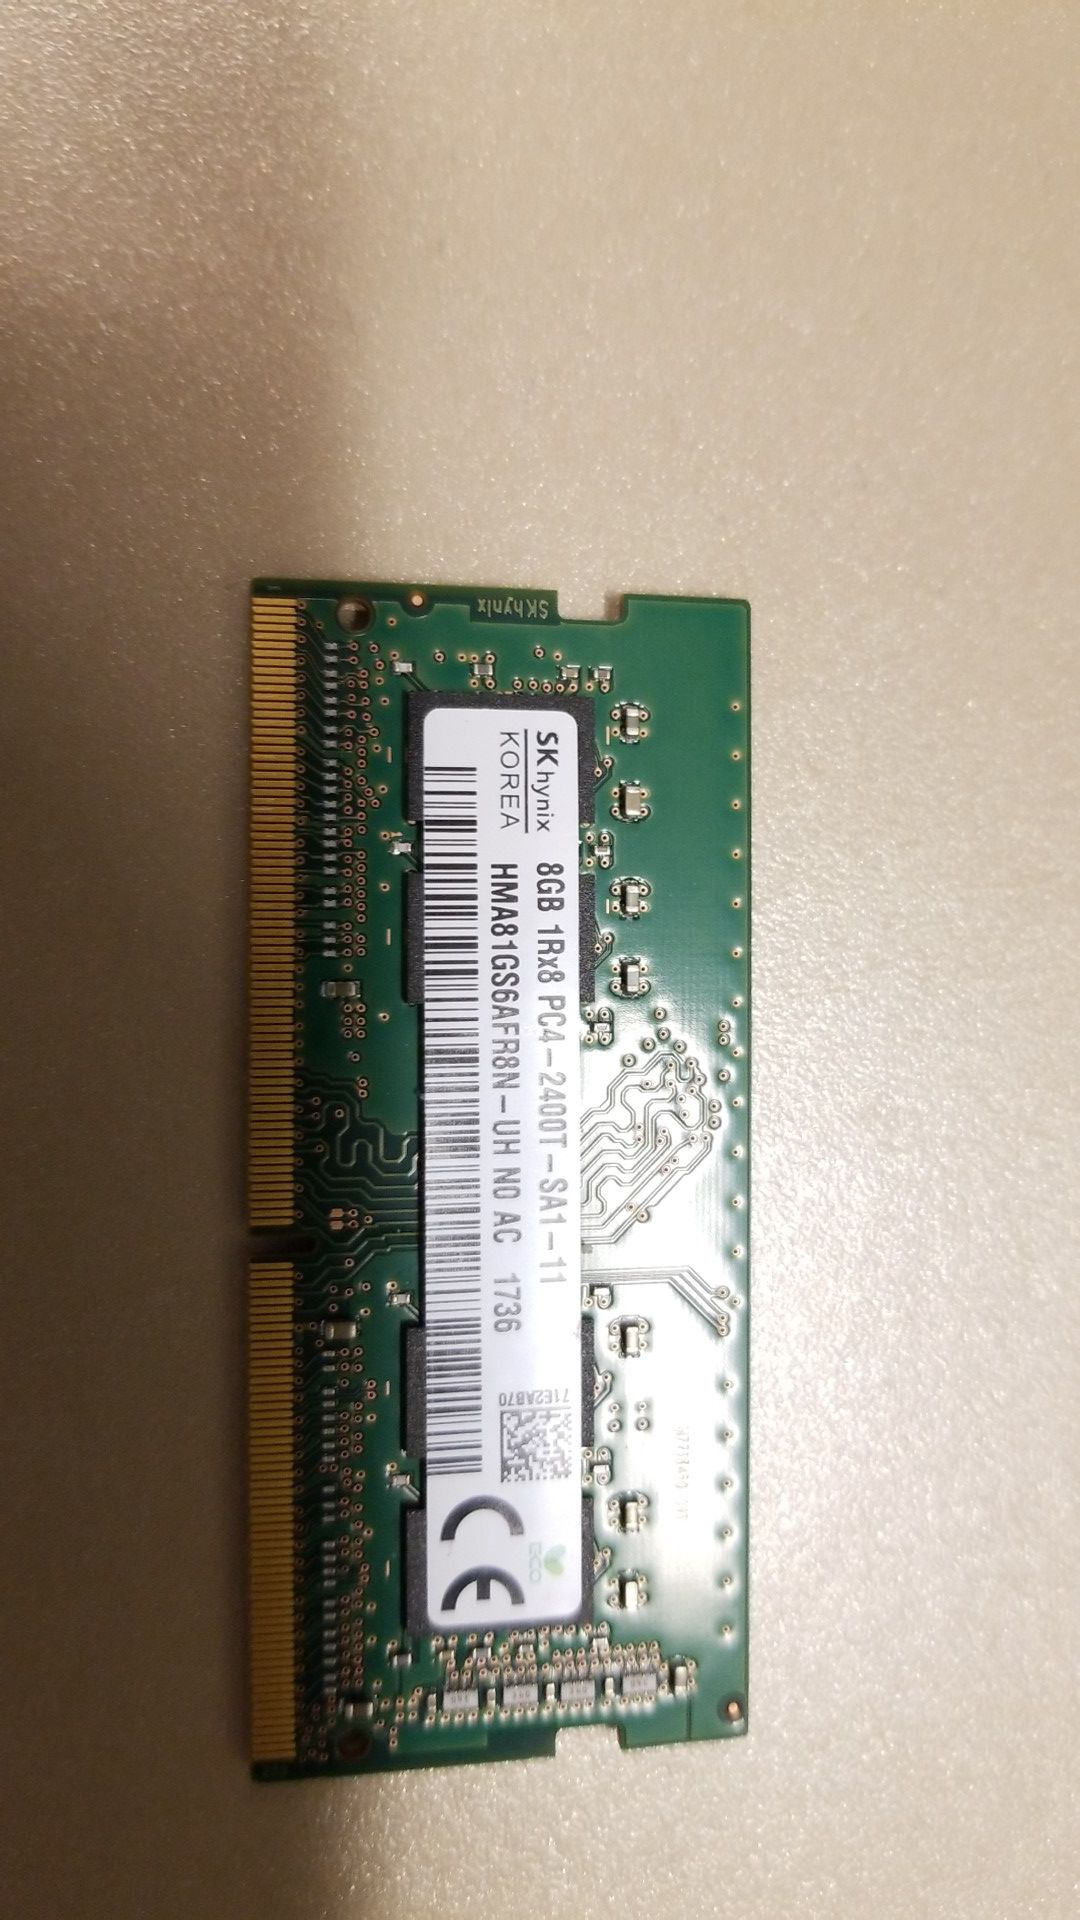 8gb pc4 memory card